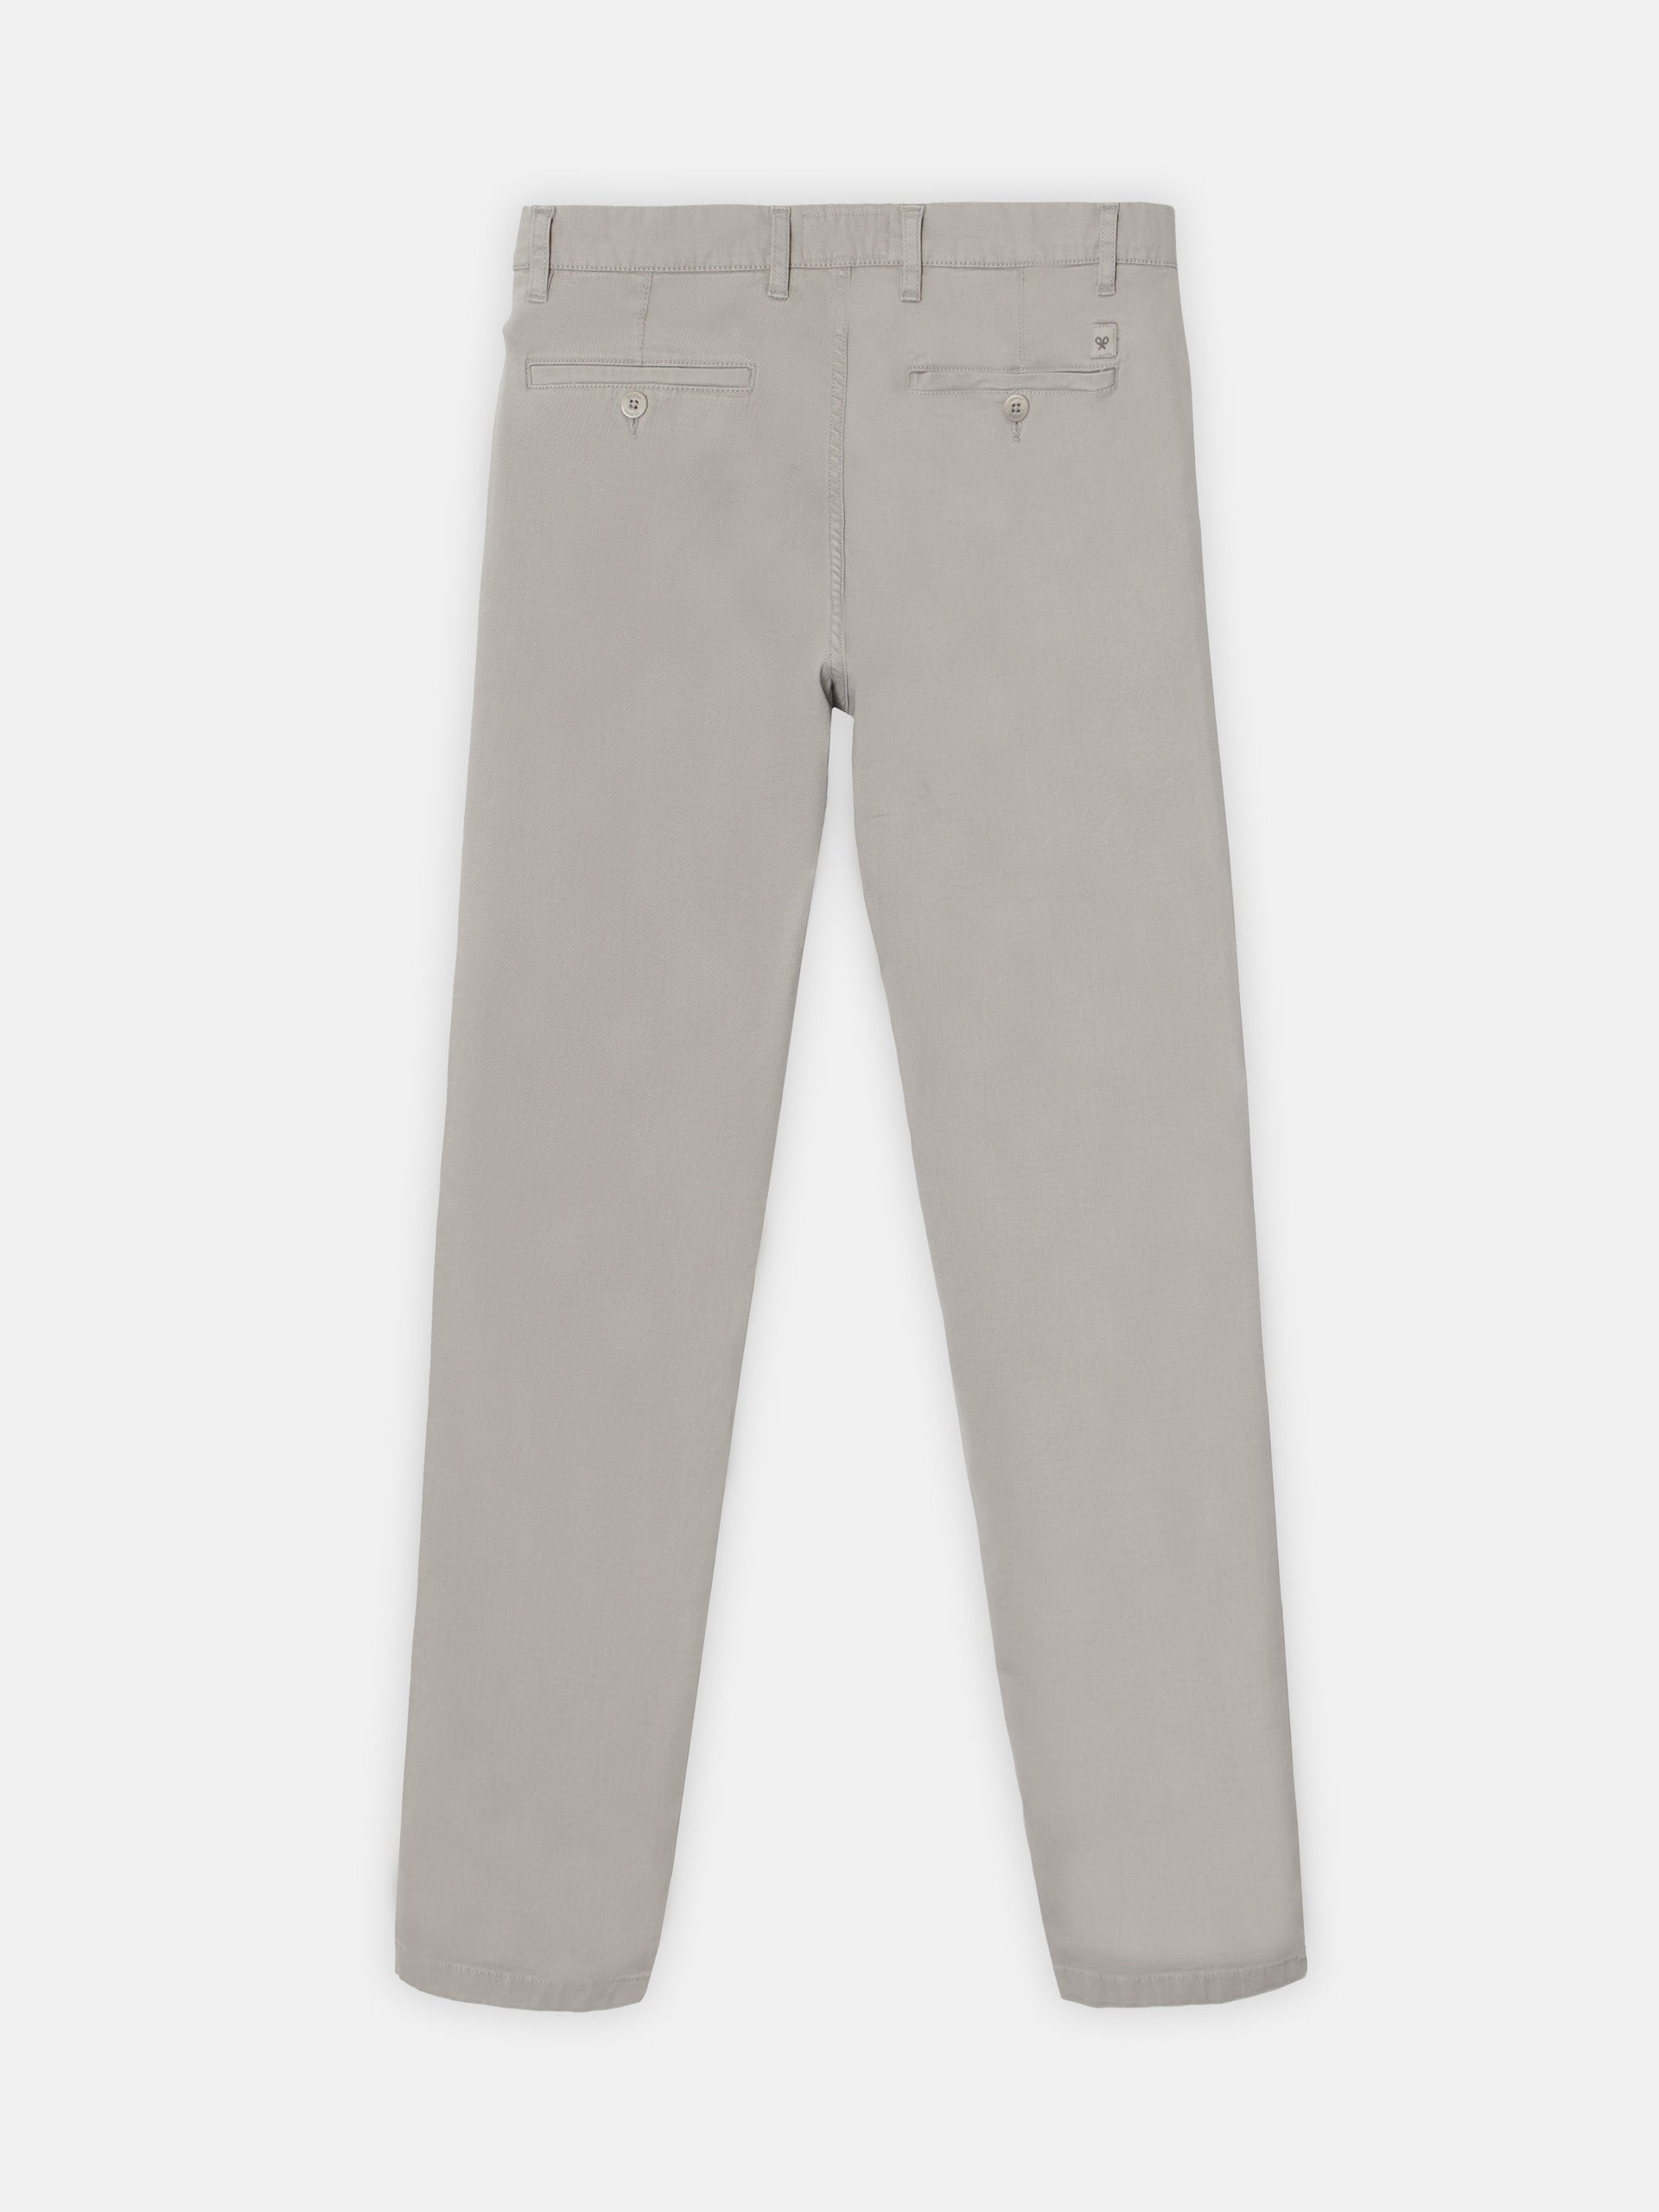 Gray chino sport pants